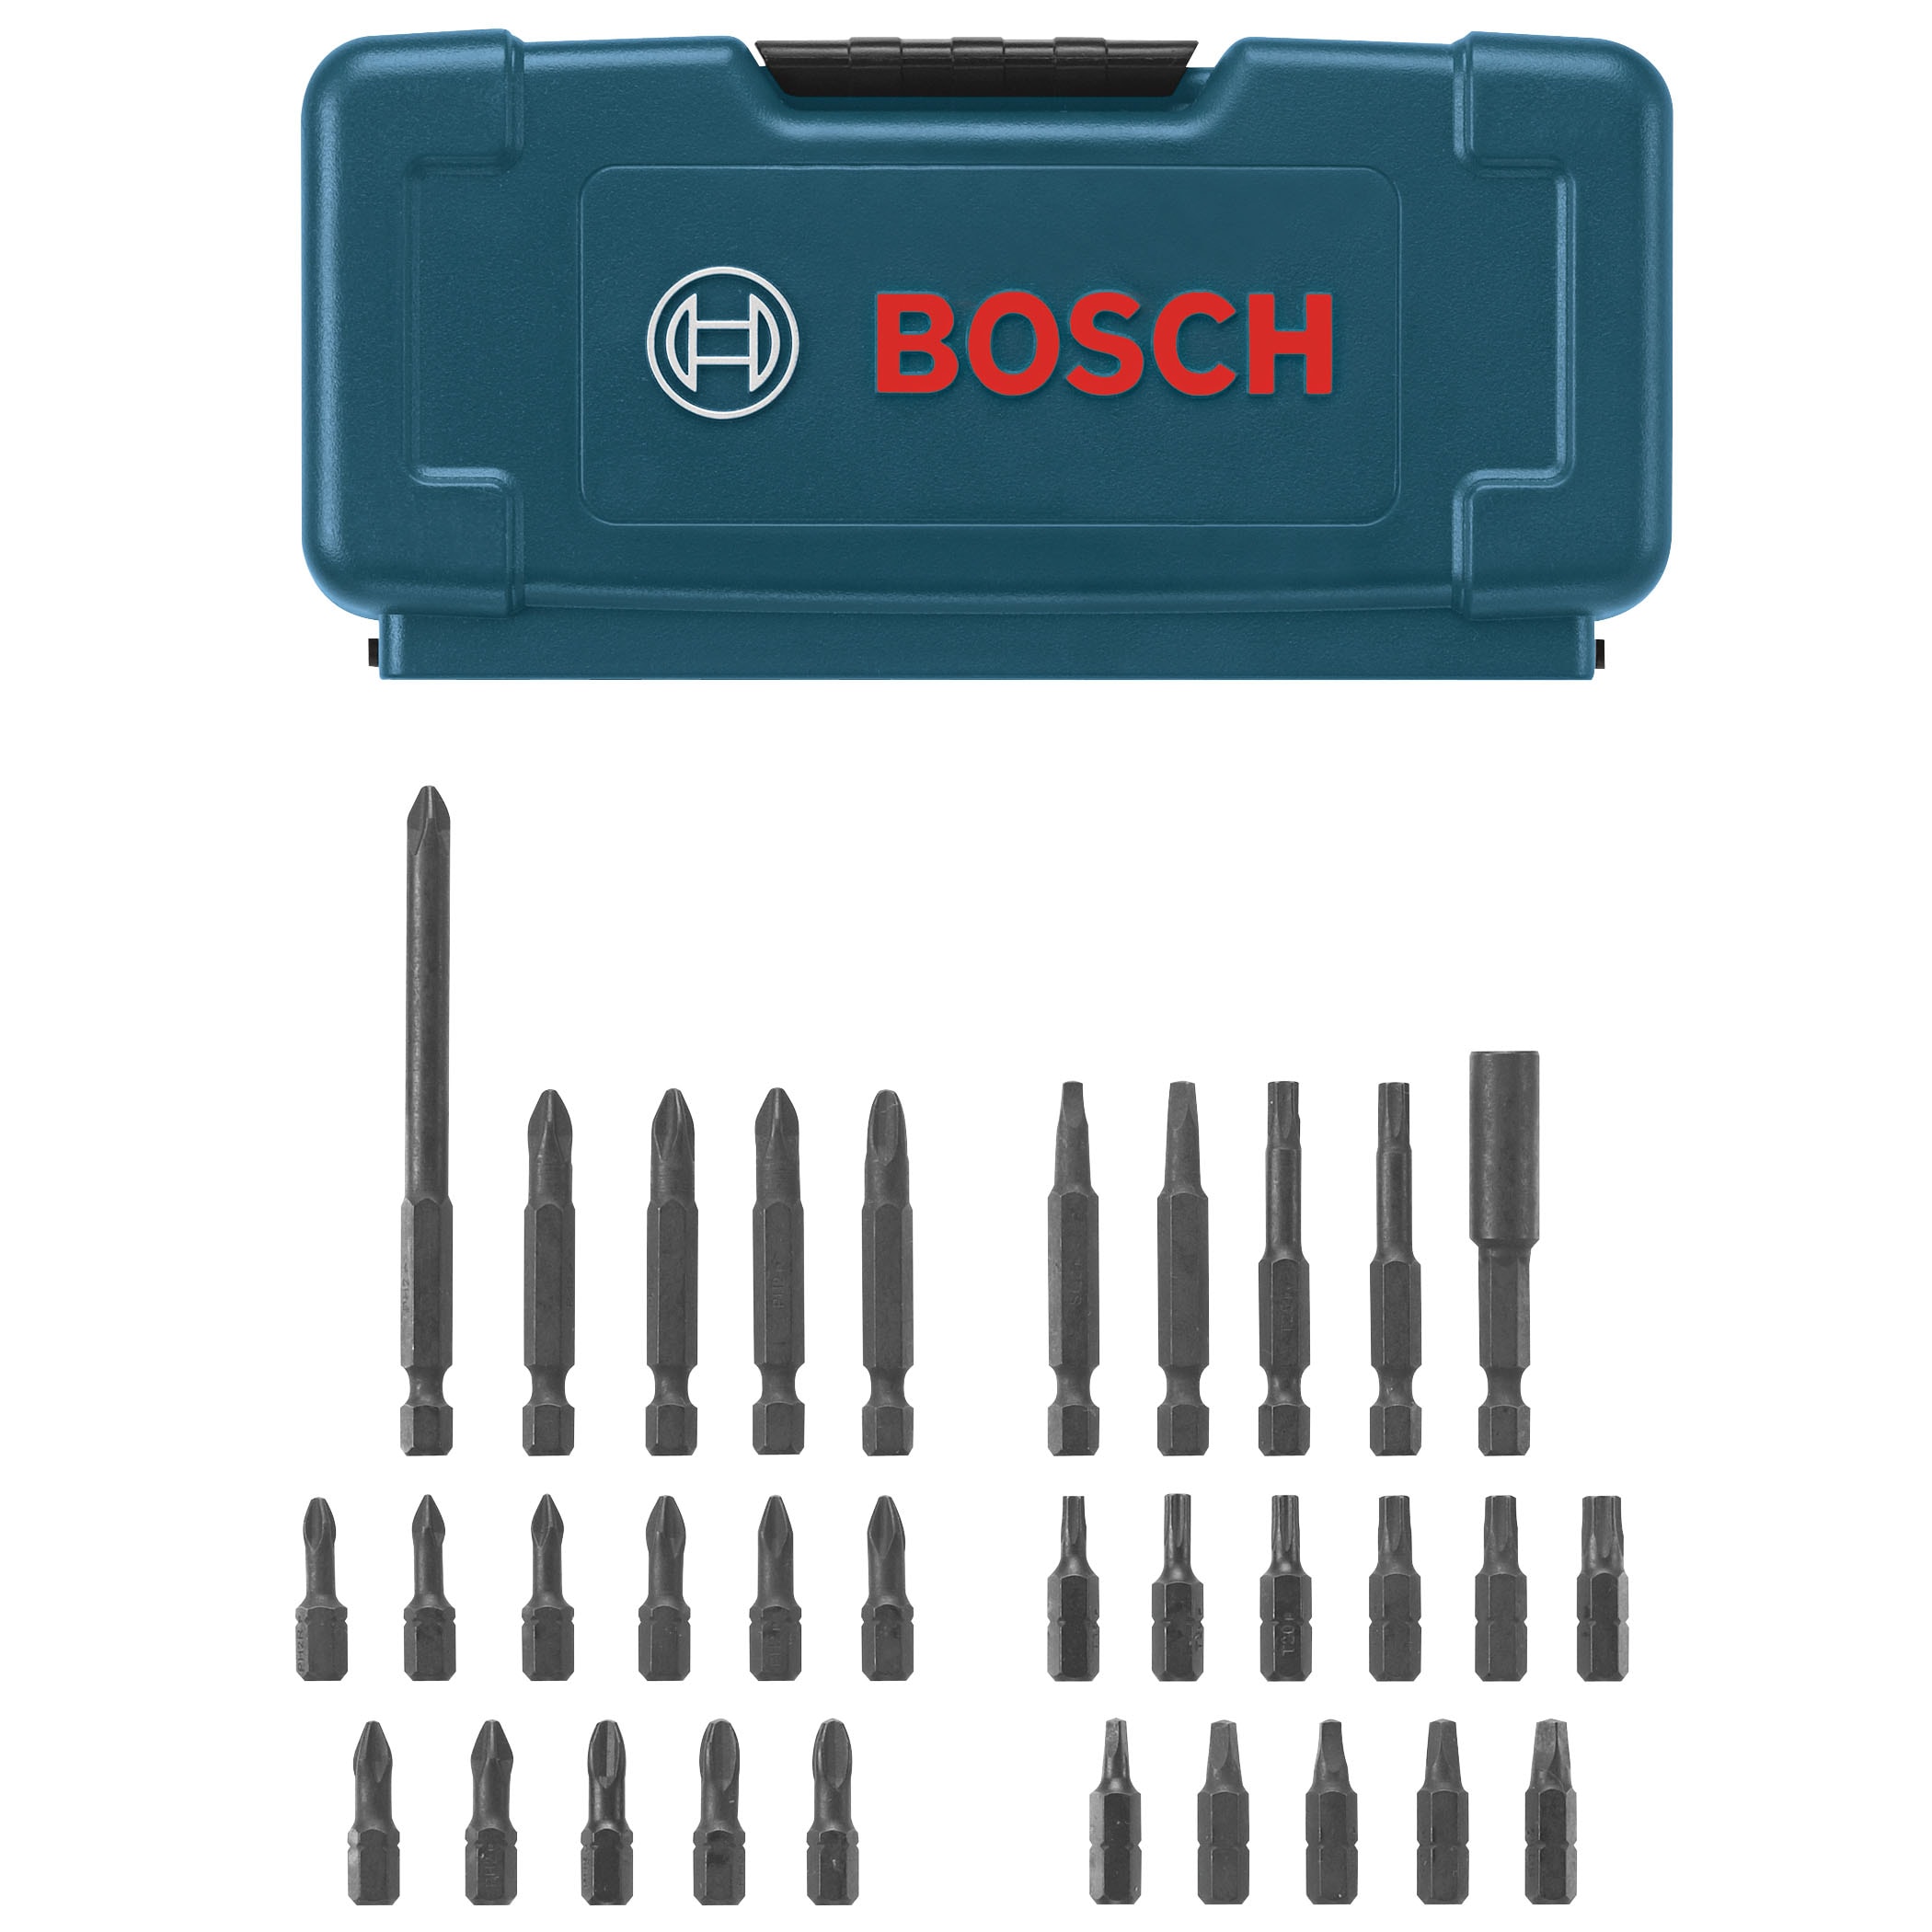 Bosch Screwdriver Bit Set (32-Piece) at Lowes.com